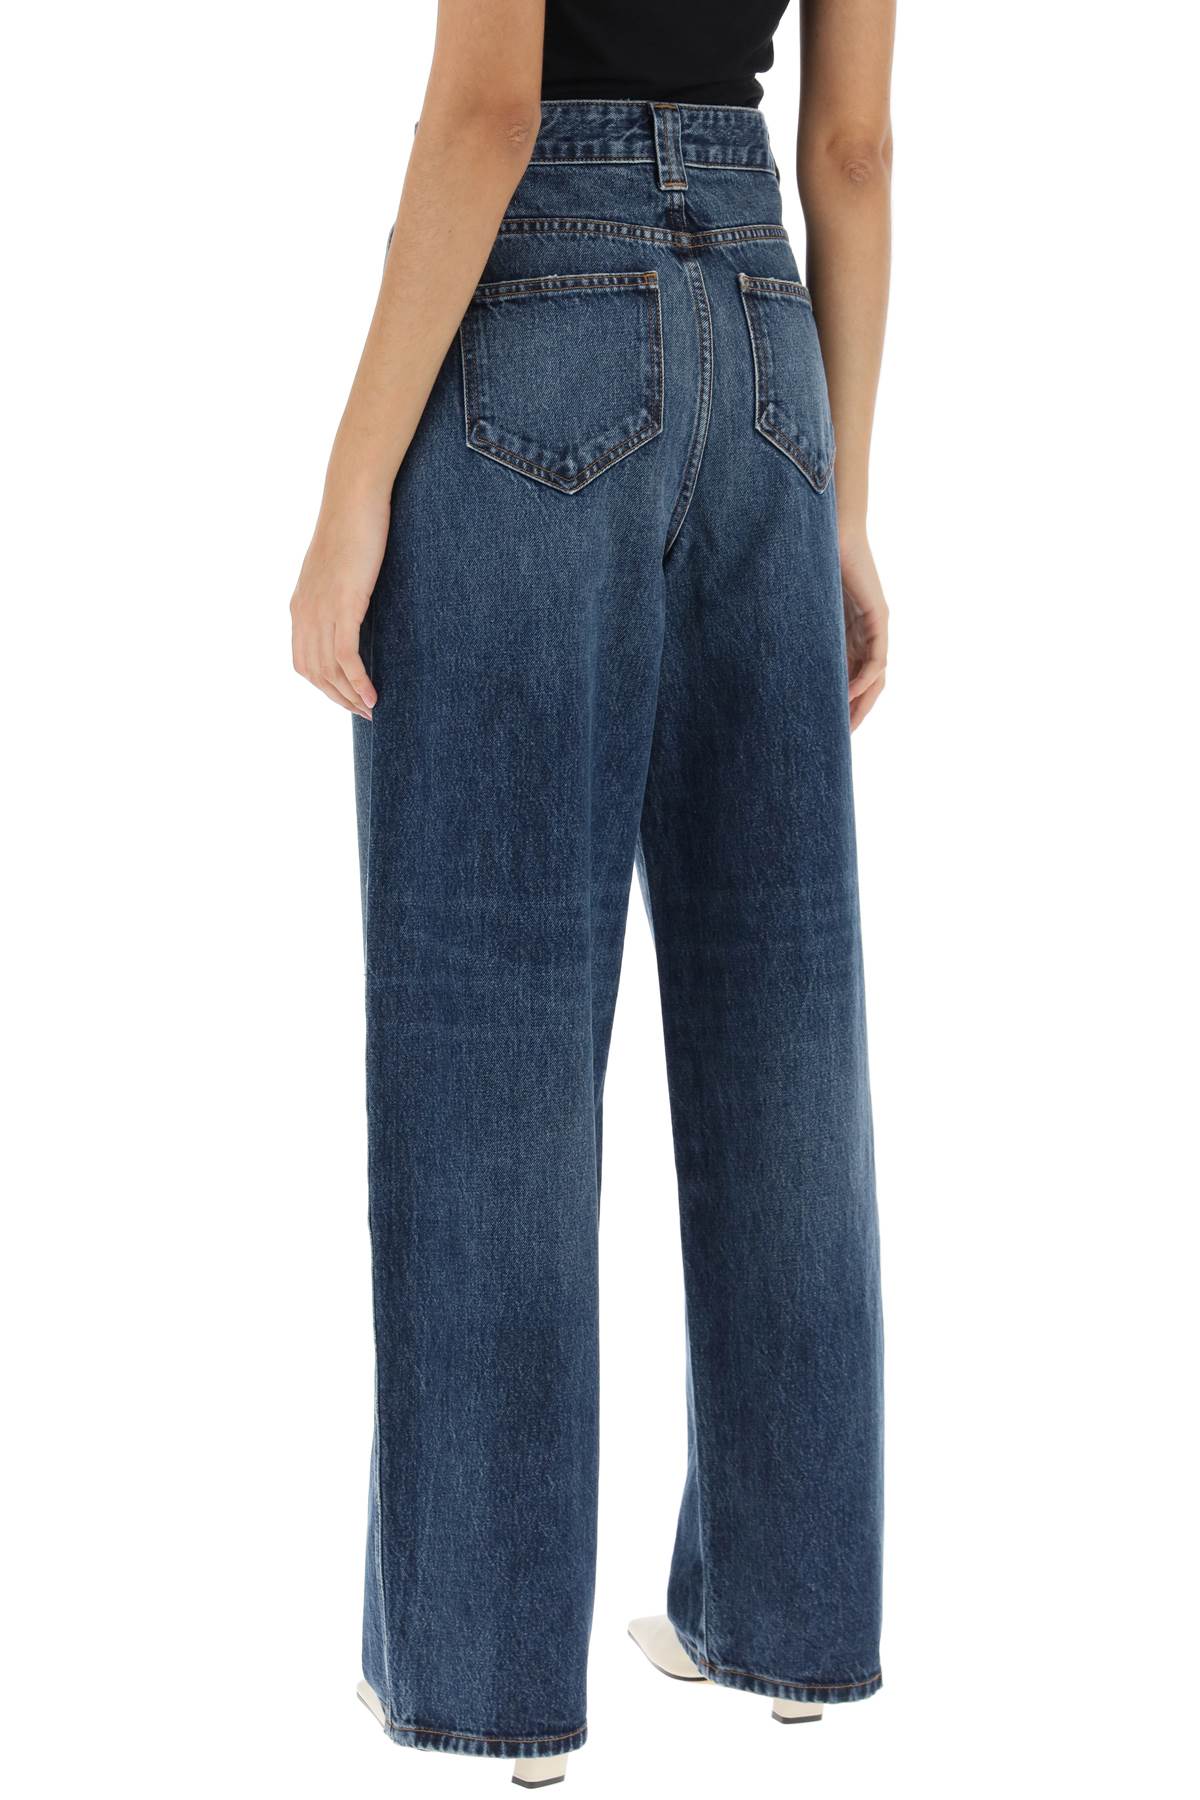 Khaite bacall wide leg jeans-2